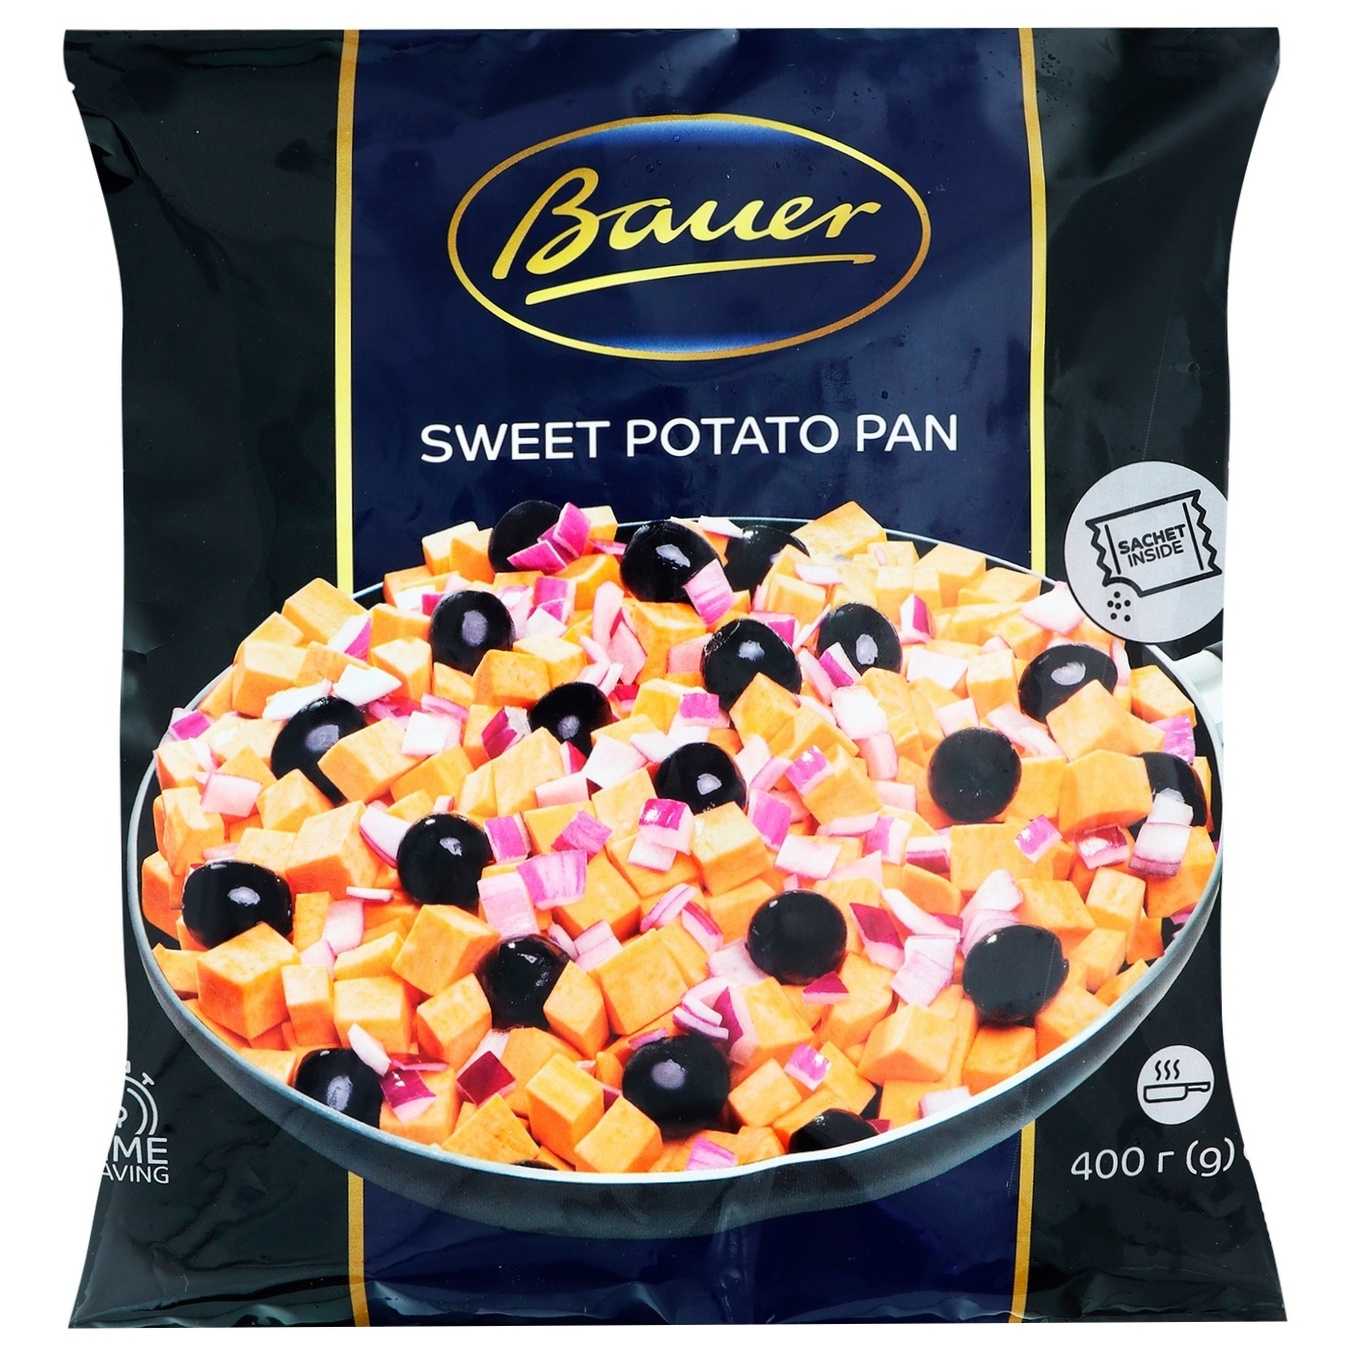 Bauer mix Sweet potato for frying frozen 400g